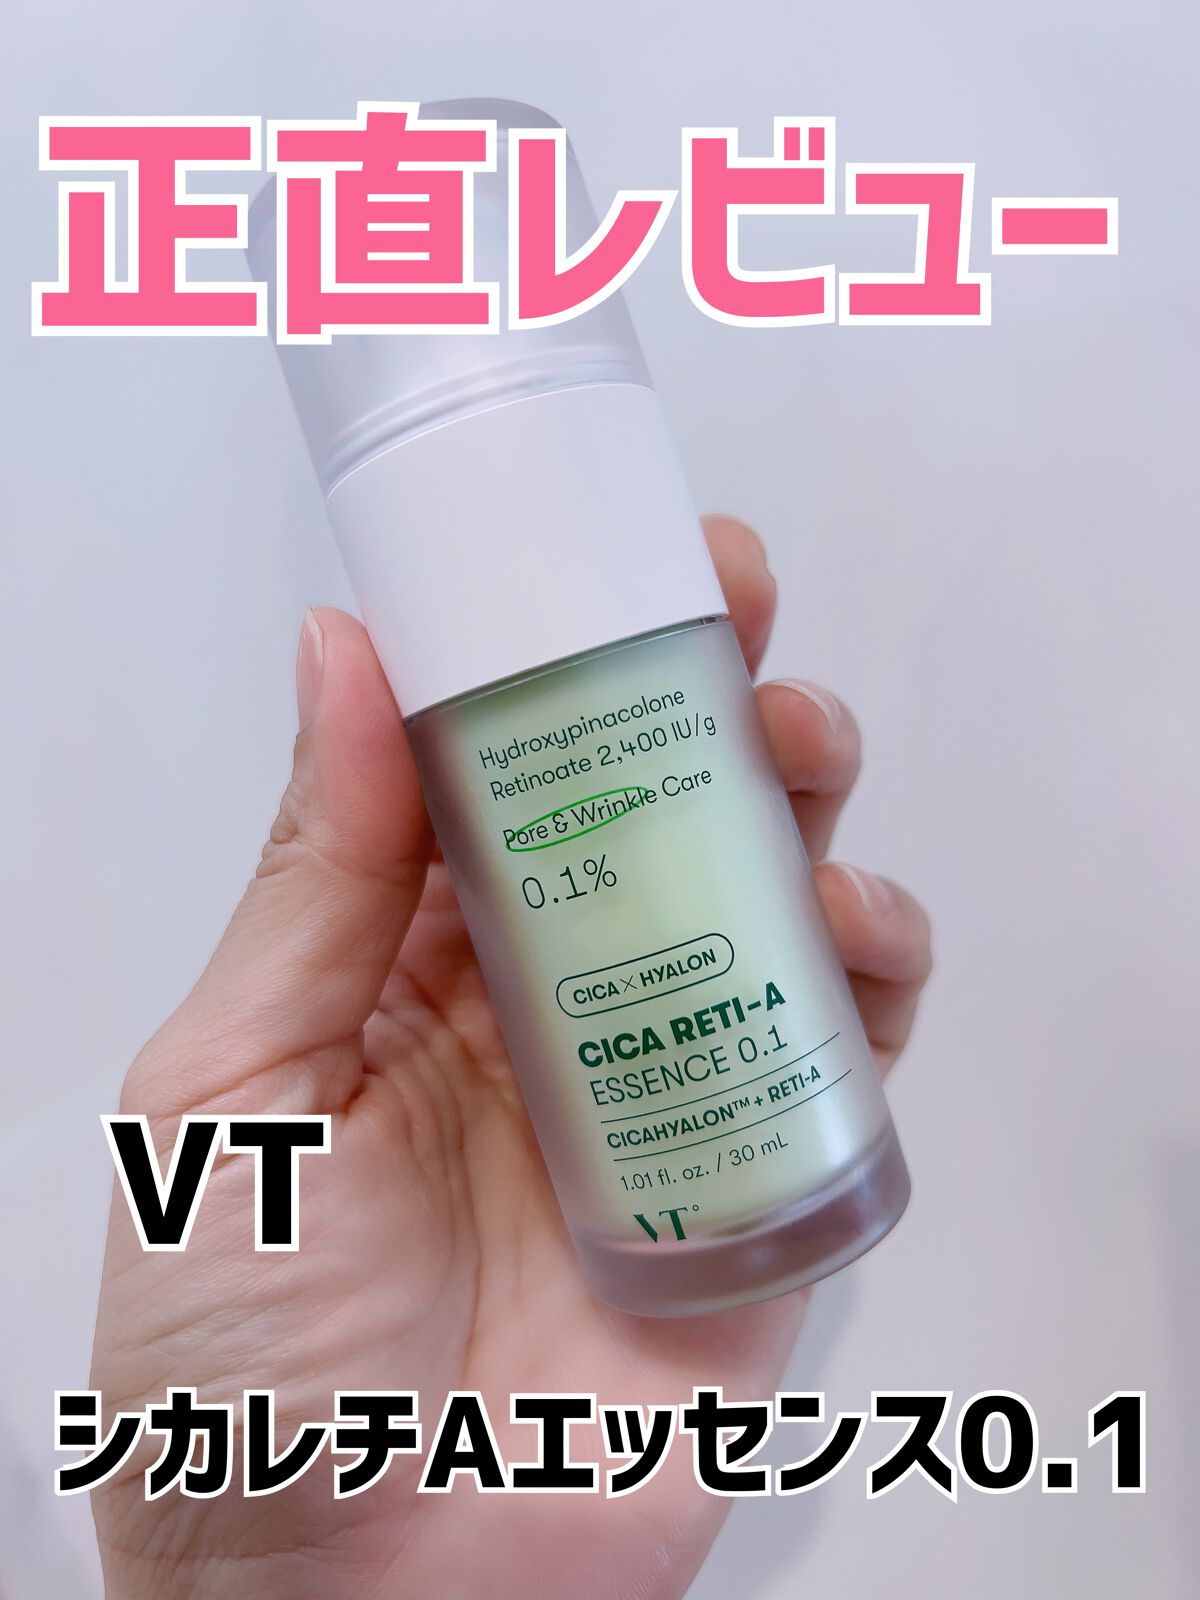 ♡VT CICA RETI-A シカレチA エッセンス0,1+サンプルセット♡